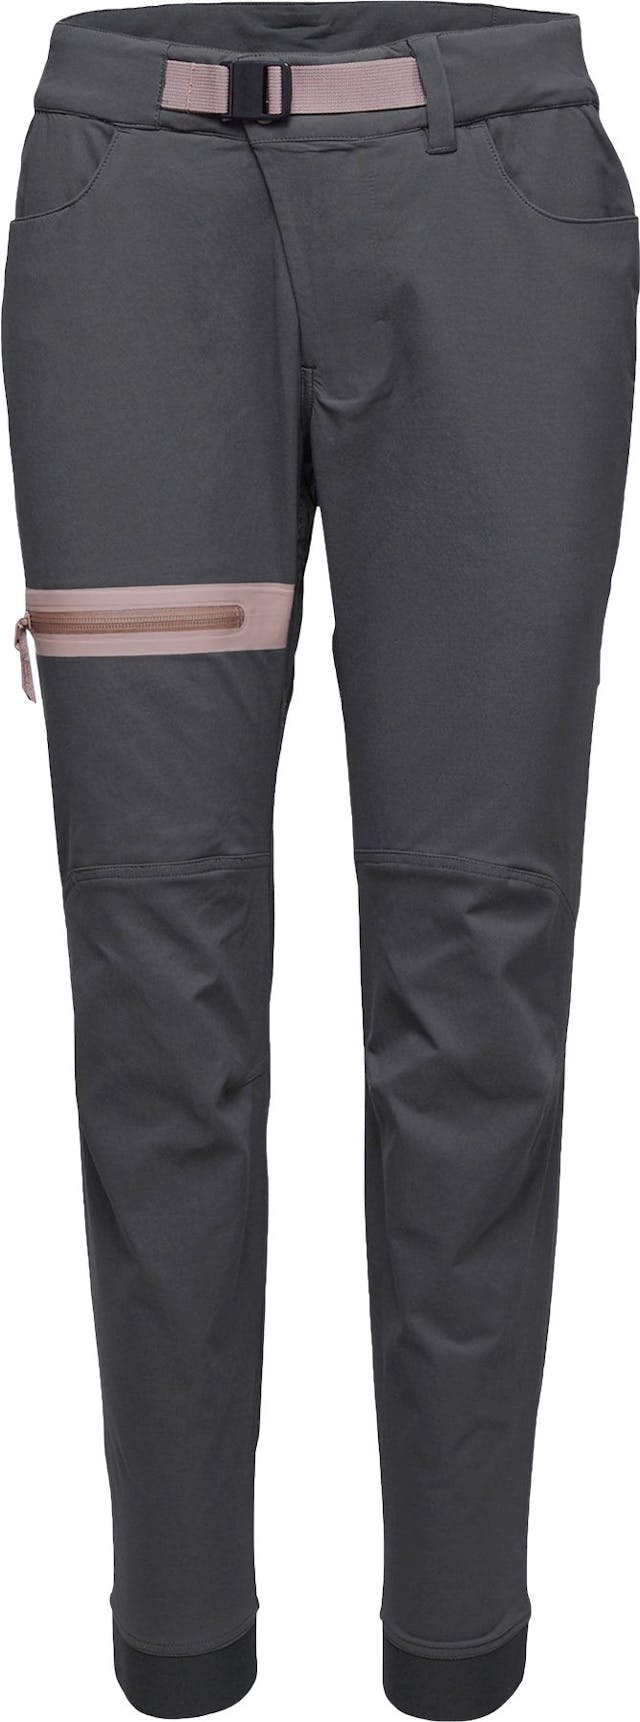 Product image for Tobin Schoeller Mountain Bike Pants  - Women's